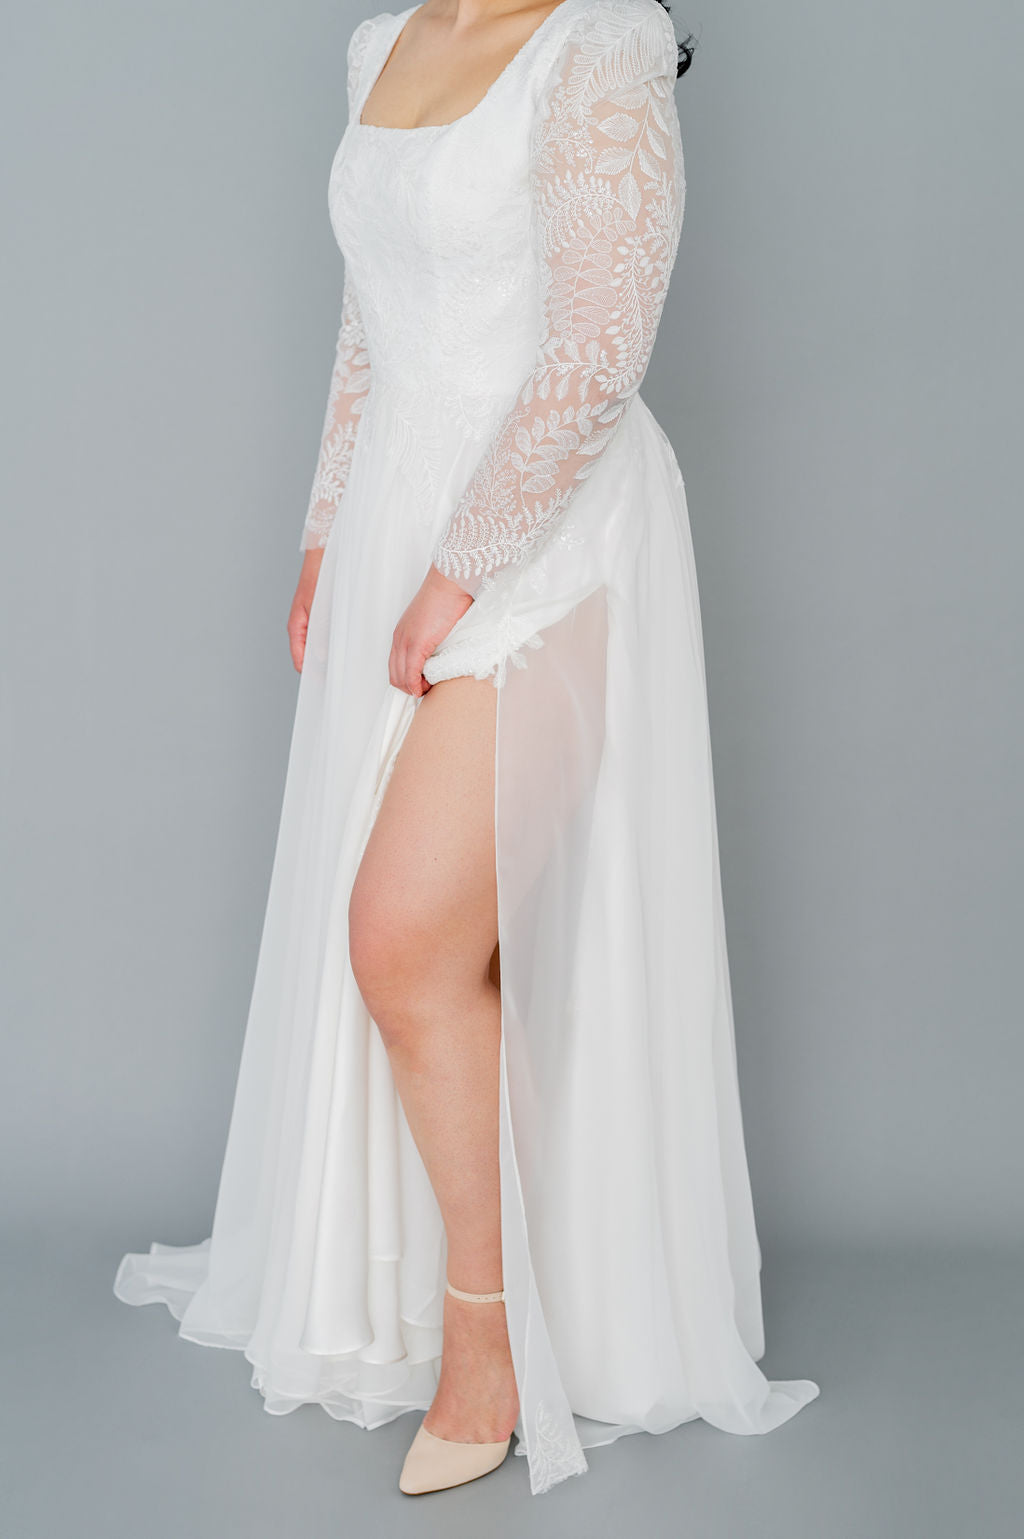 Ciel-CL Wedding Dresses & Bridal Boutique Toronto